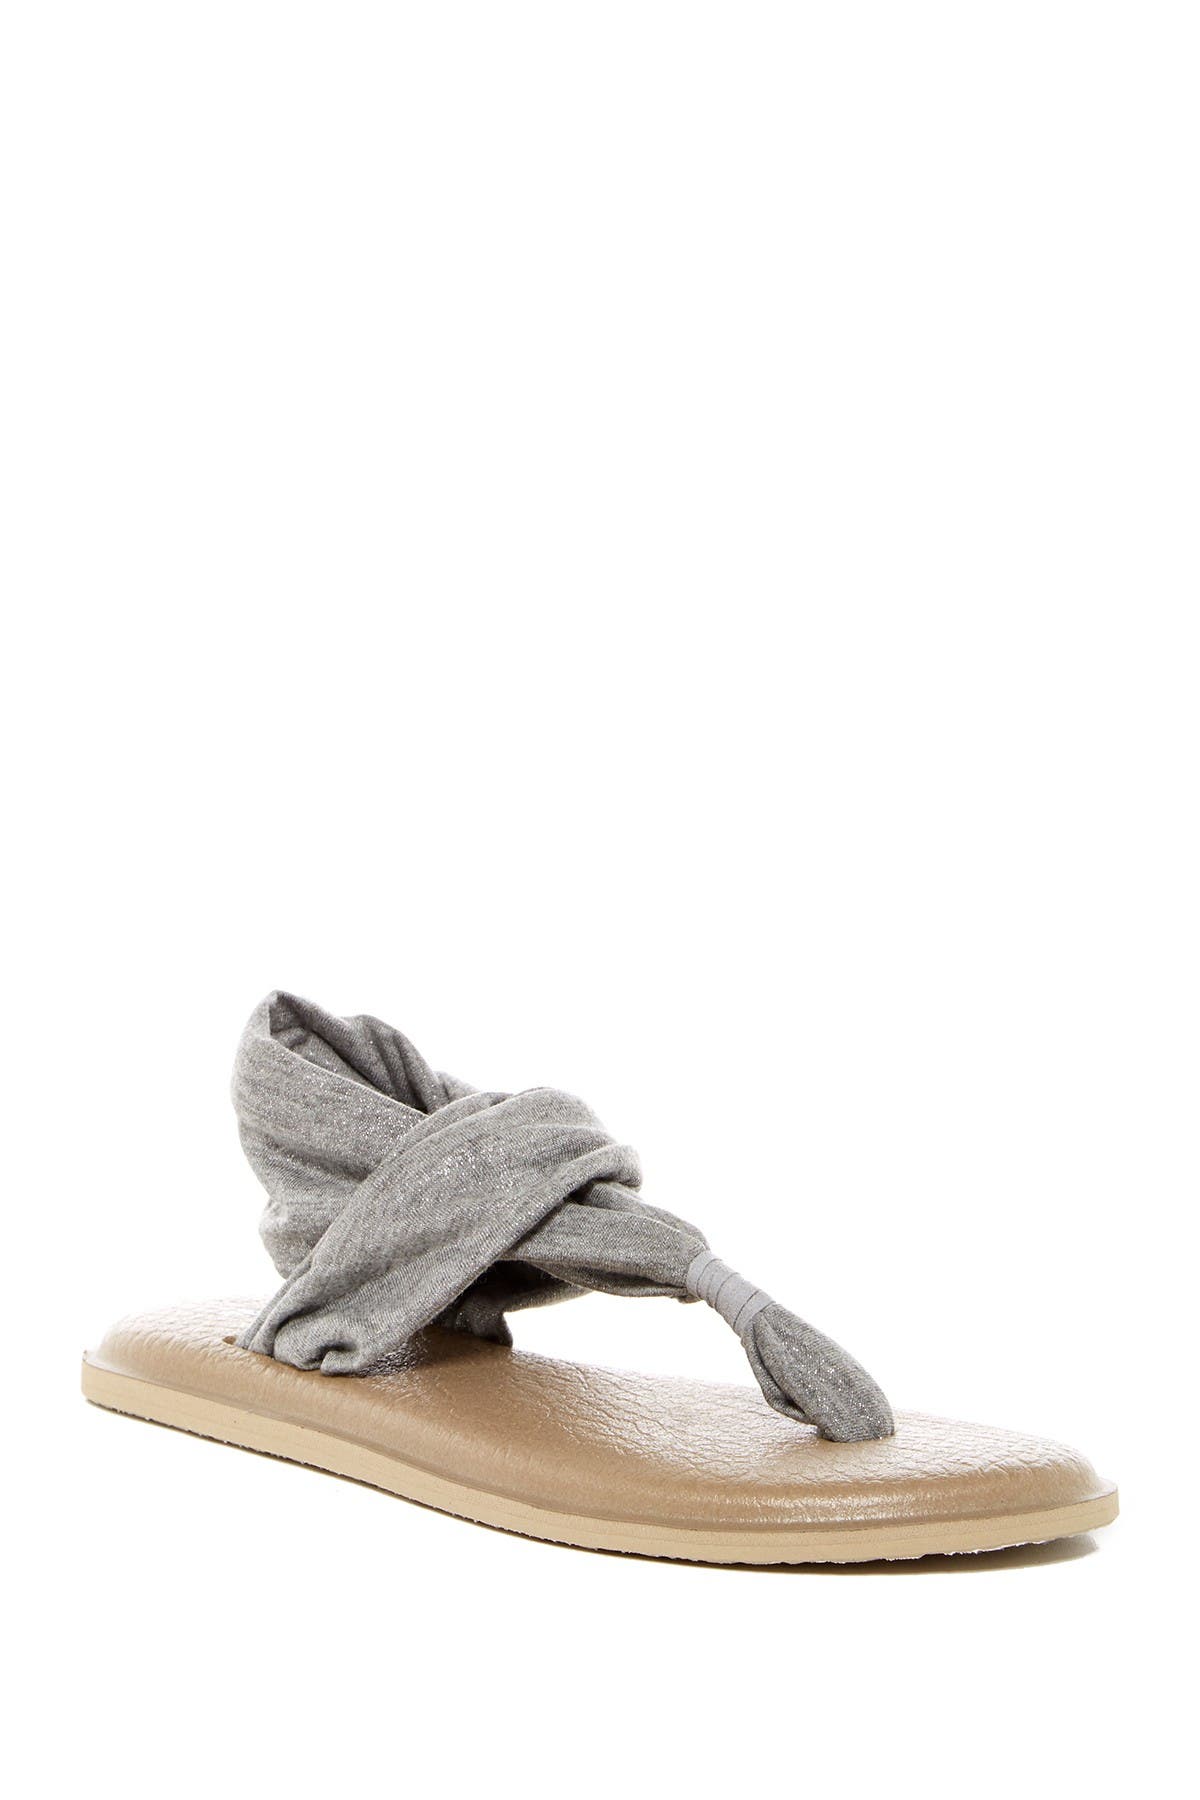 Sanuk | Yoga Sling 2 Metallic Sandal 